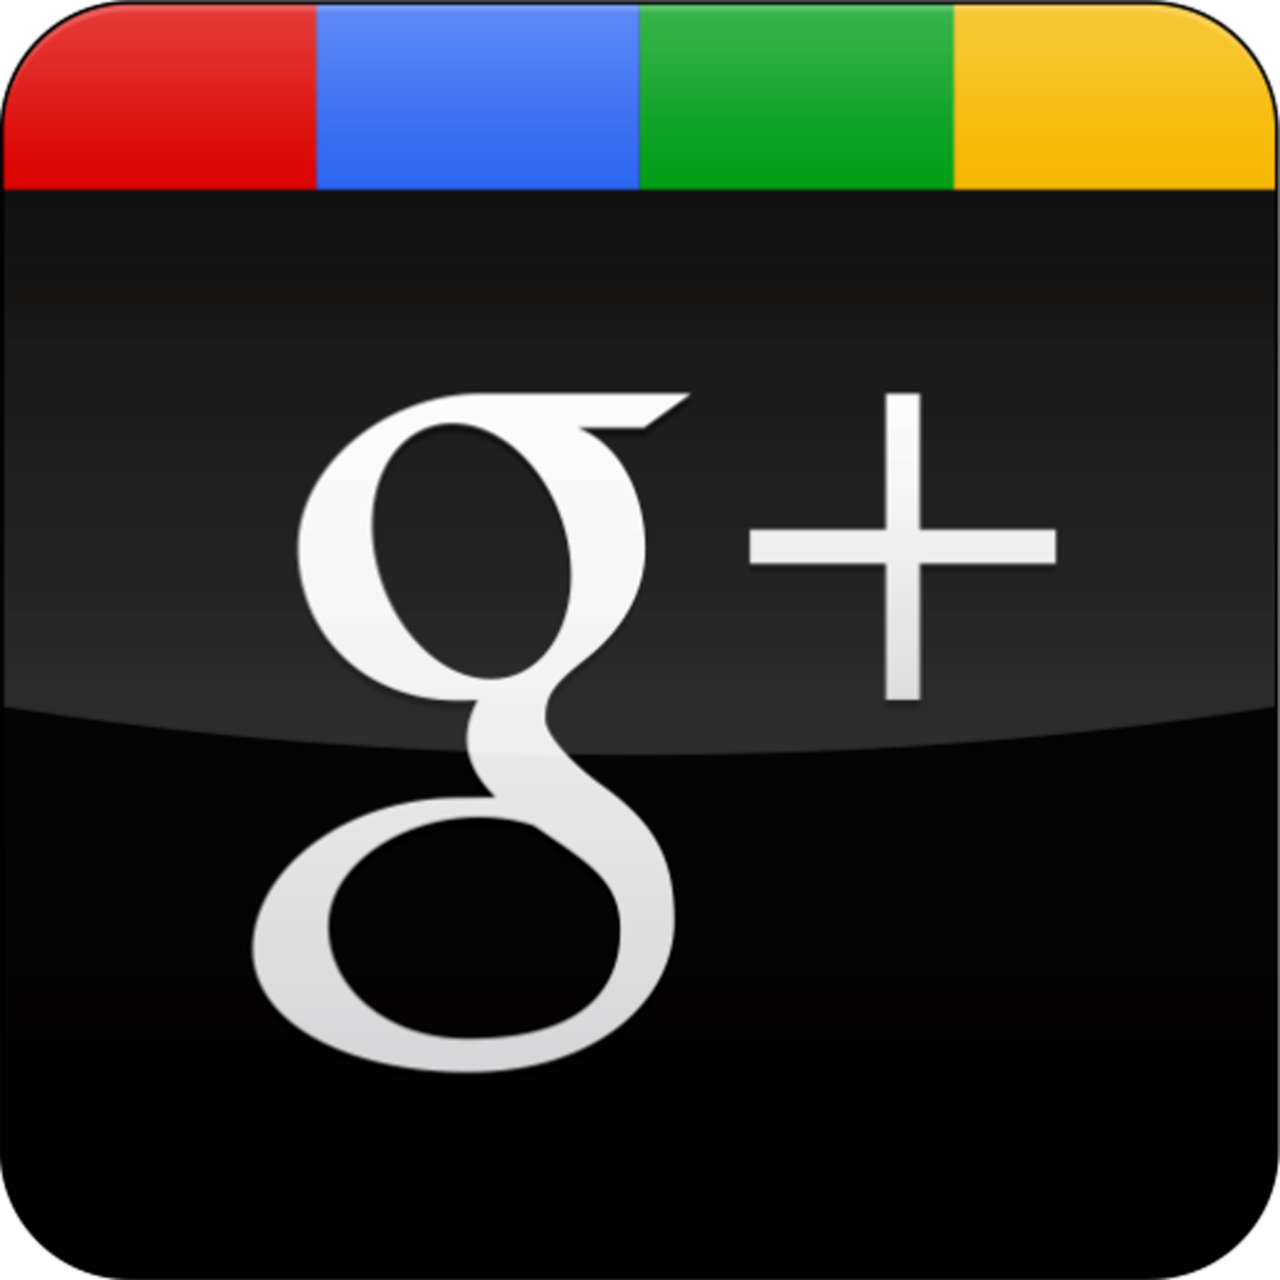 Social Media Logos: Wordpress and Google Plus + Logos - 1280 x 1280 png 129kB